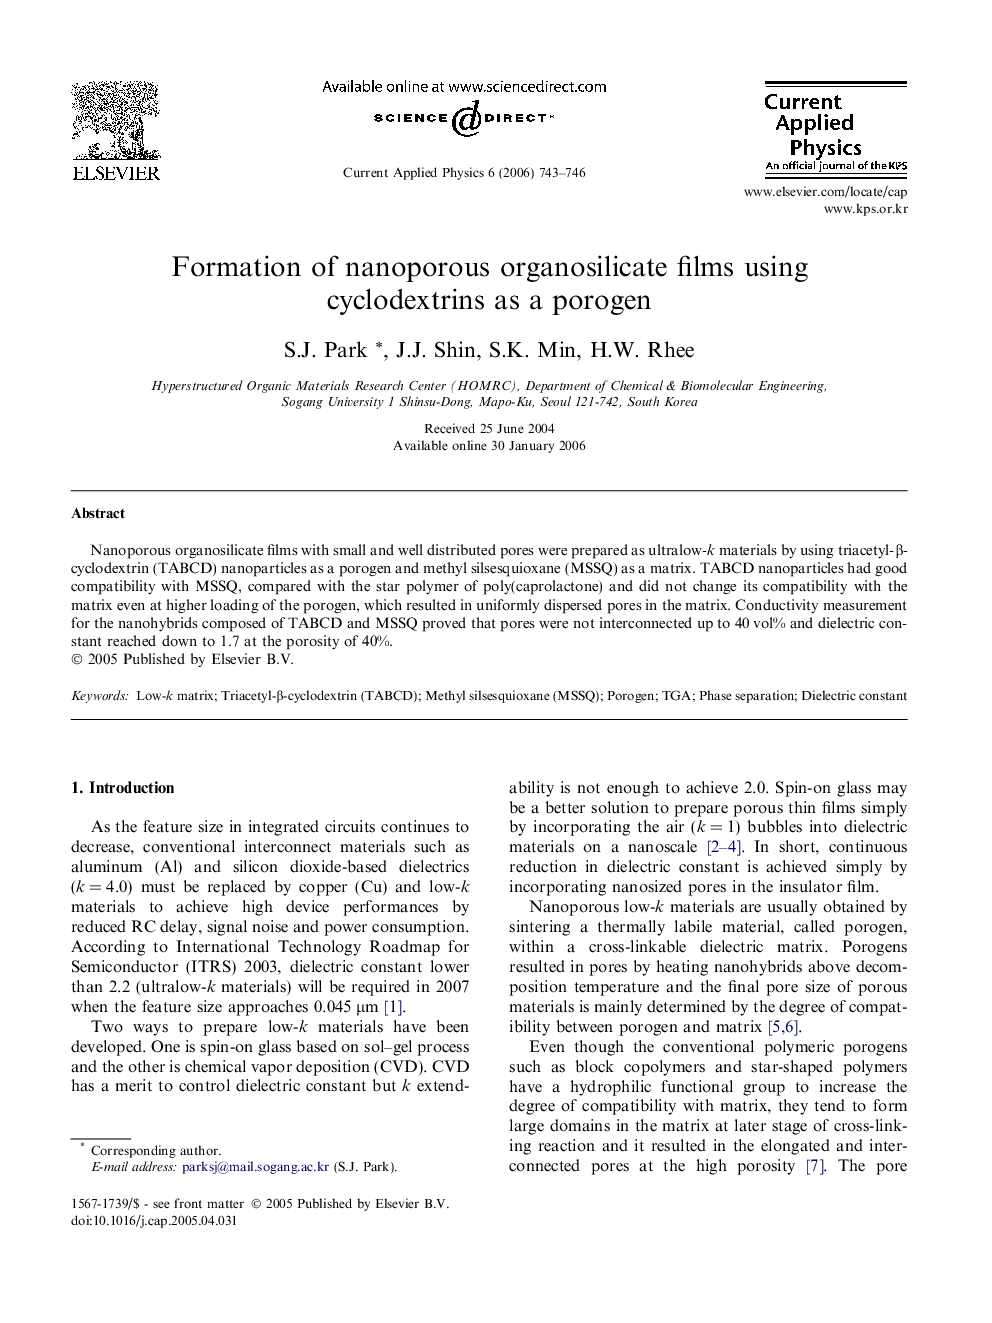 Formation of nanoporous organosilicate films using cyclodextrins as a porogen